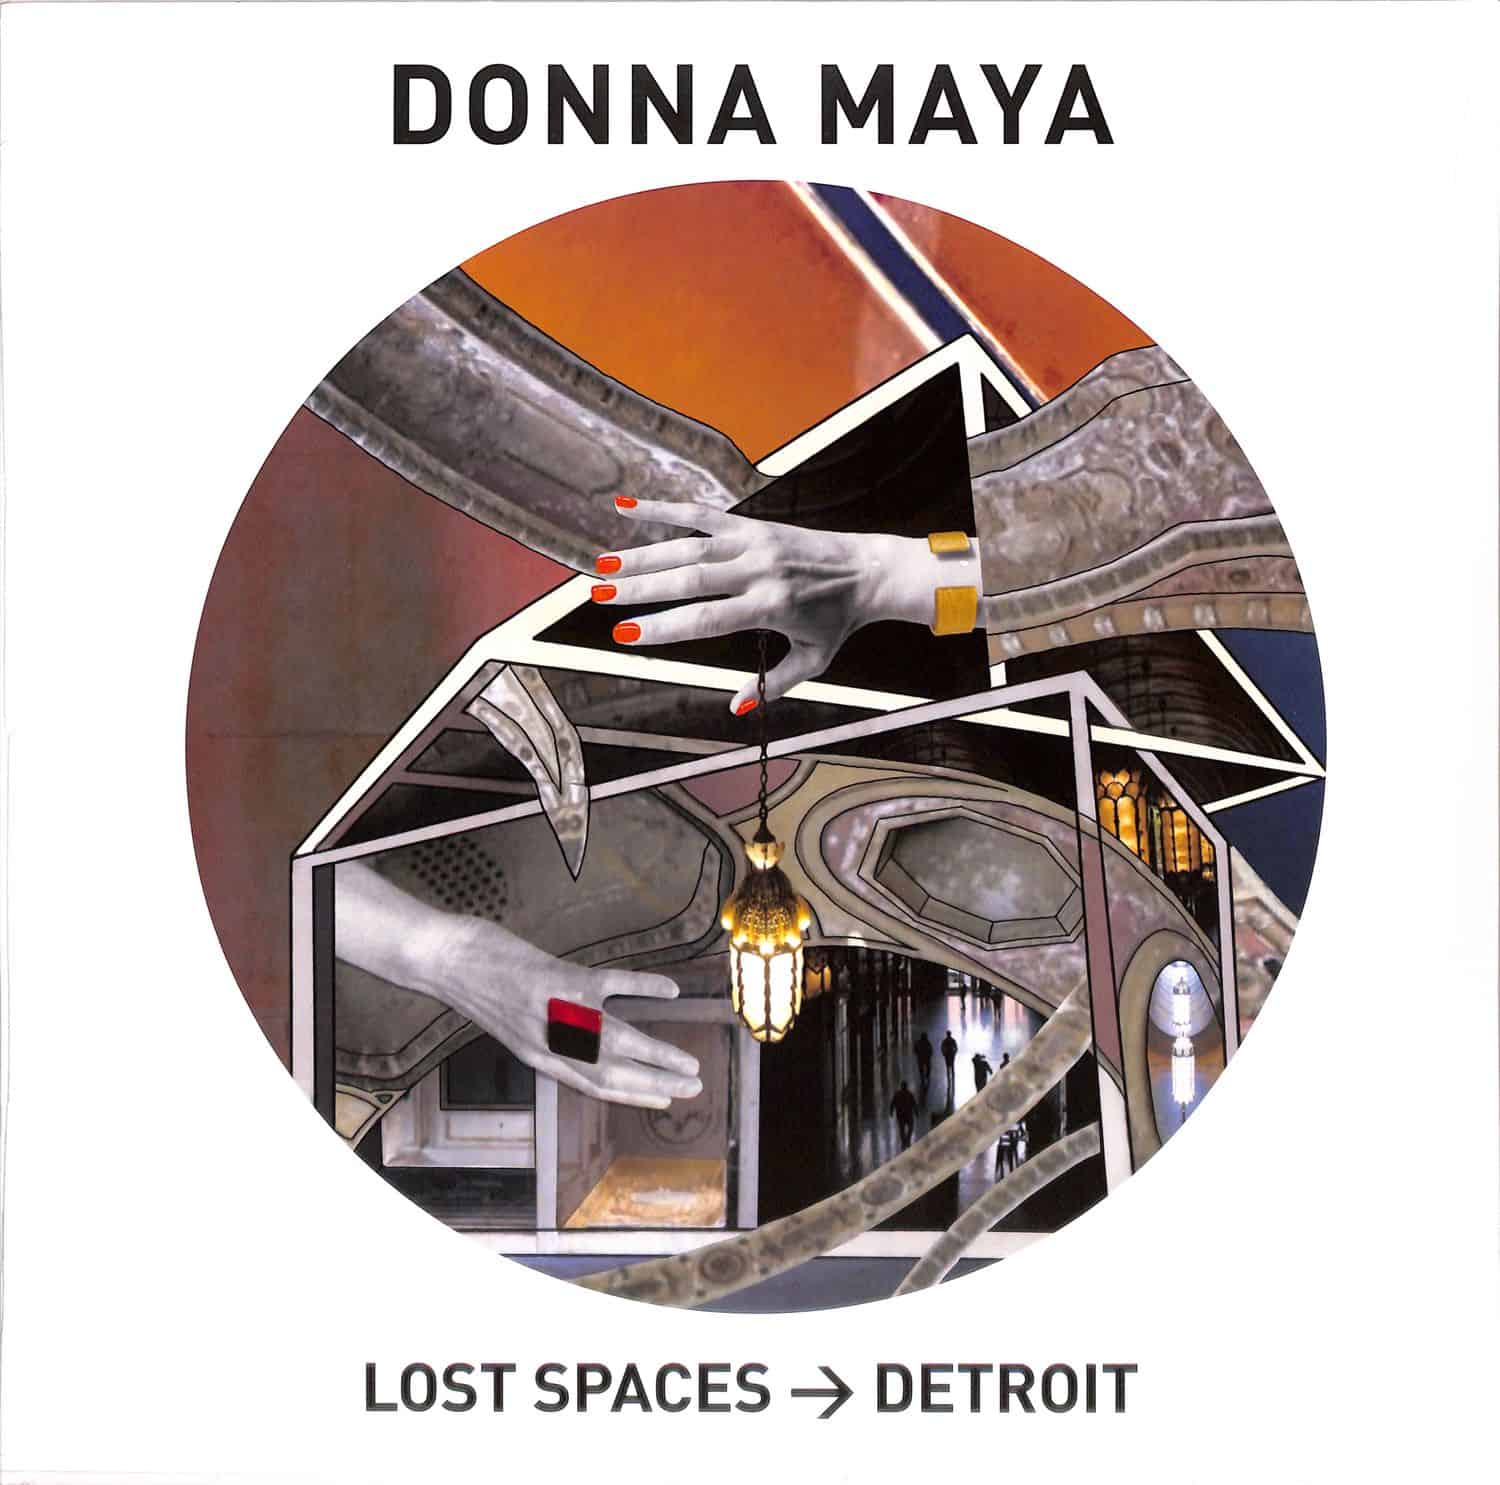 Donna Maya - LOST SPACES - DETROIT 